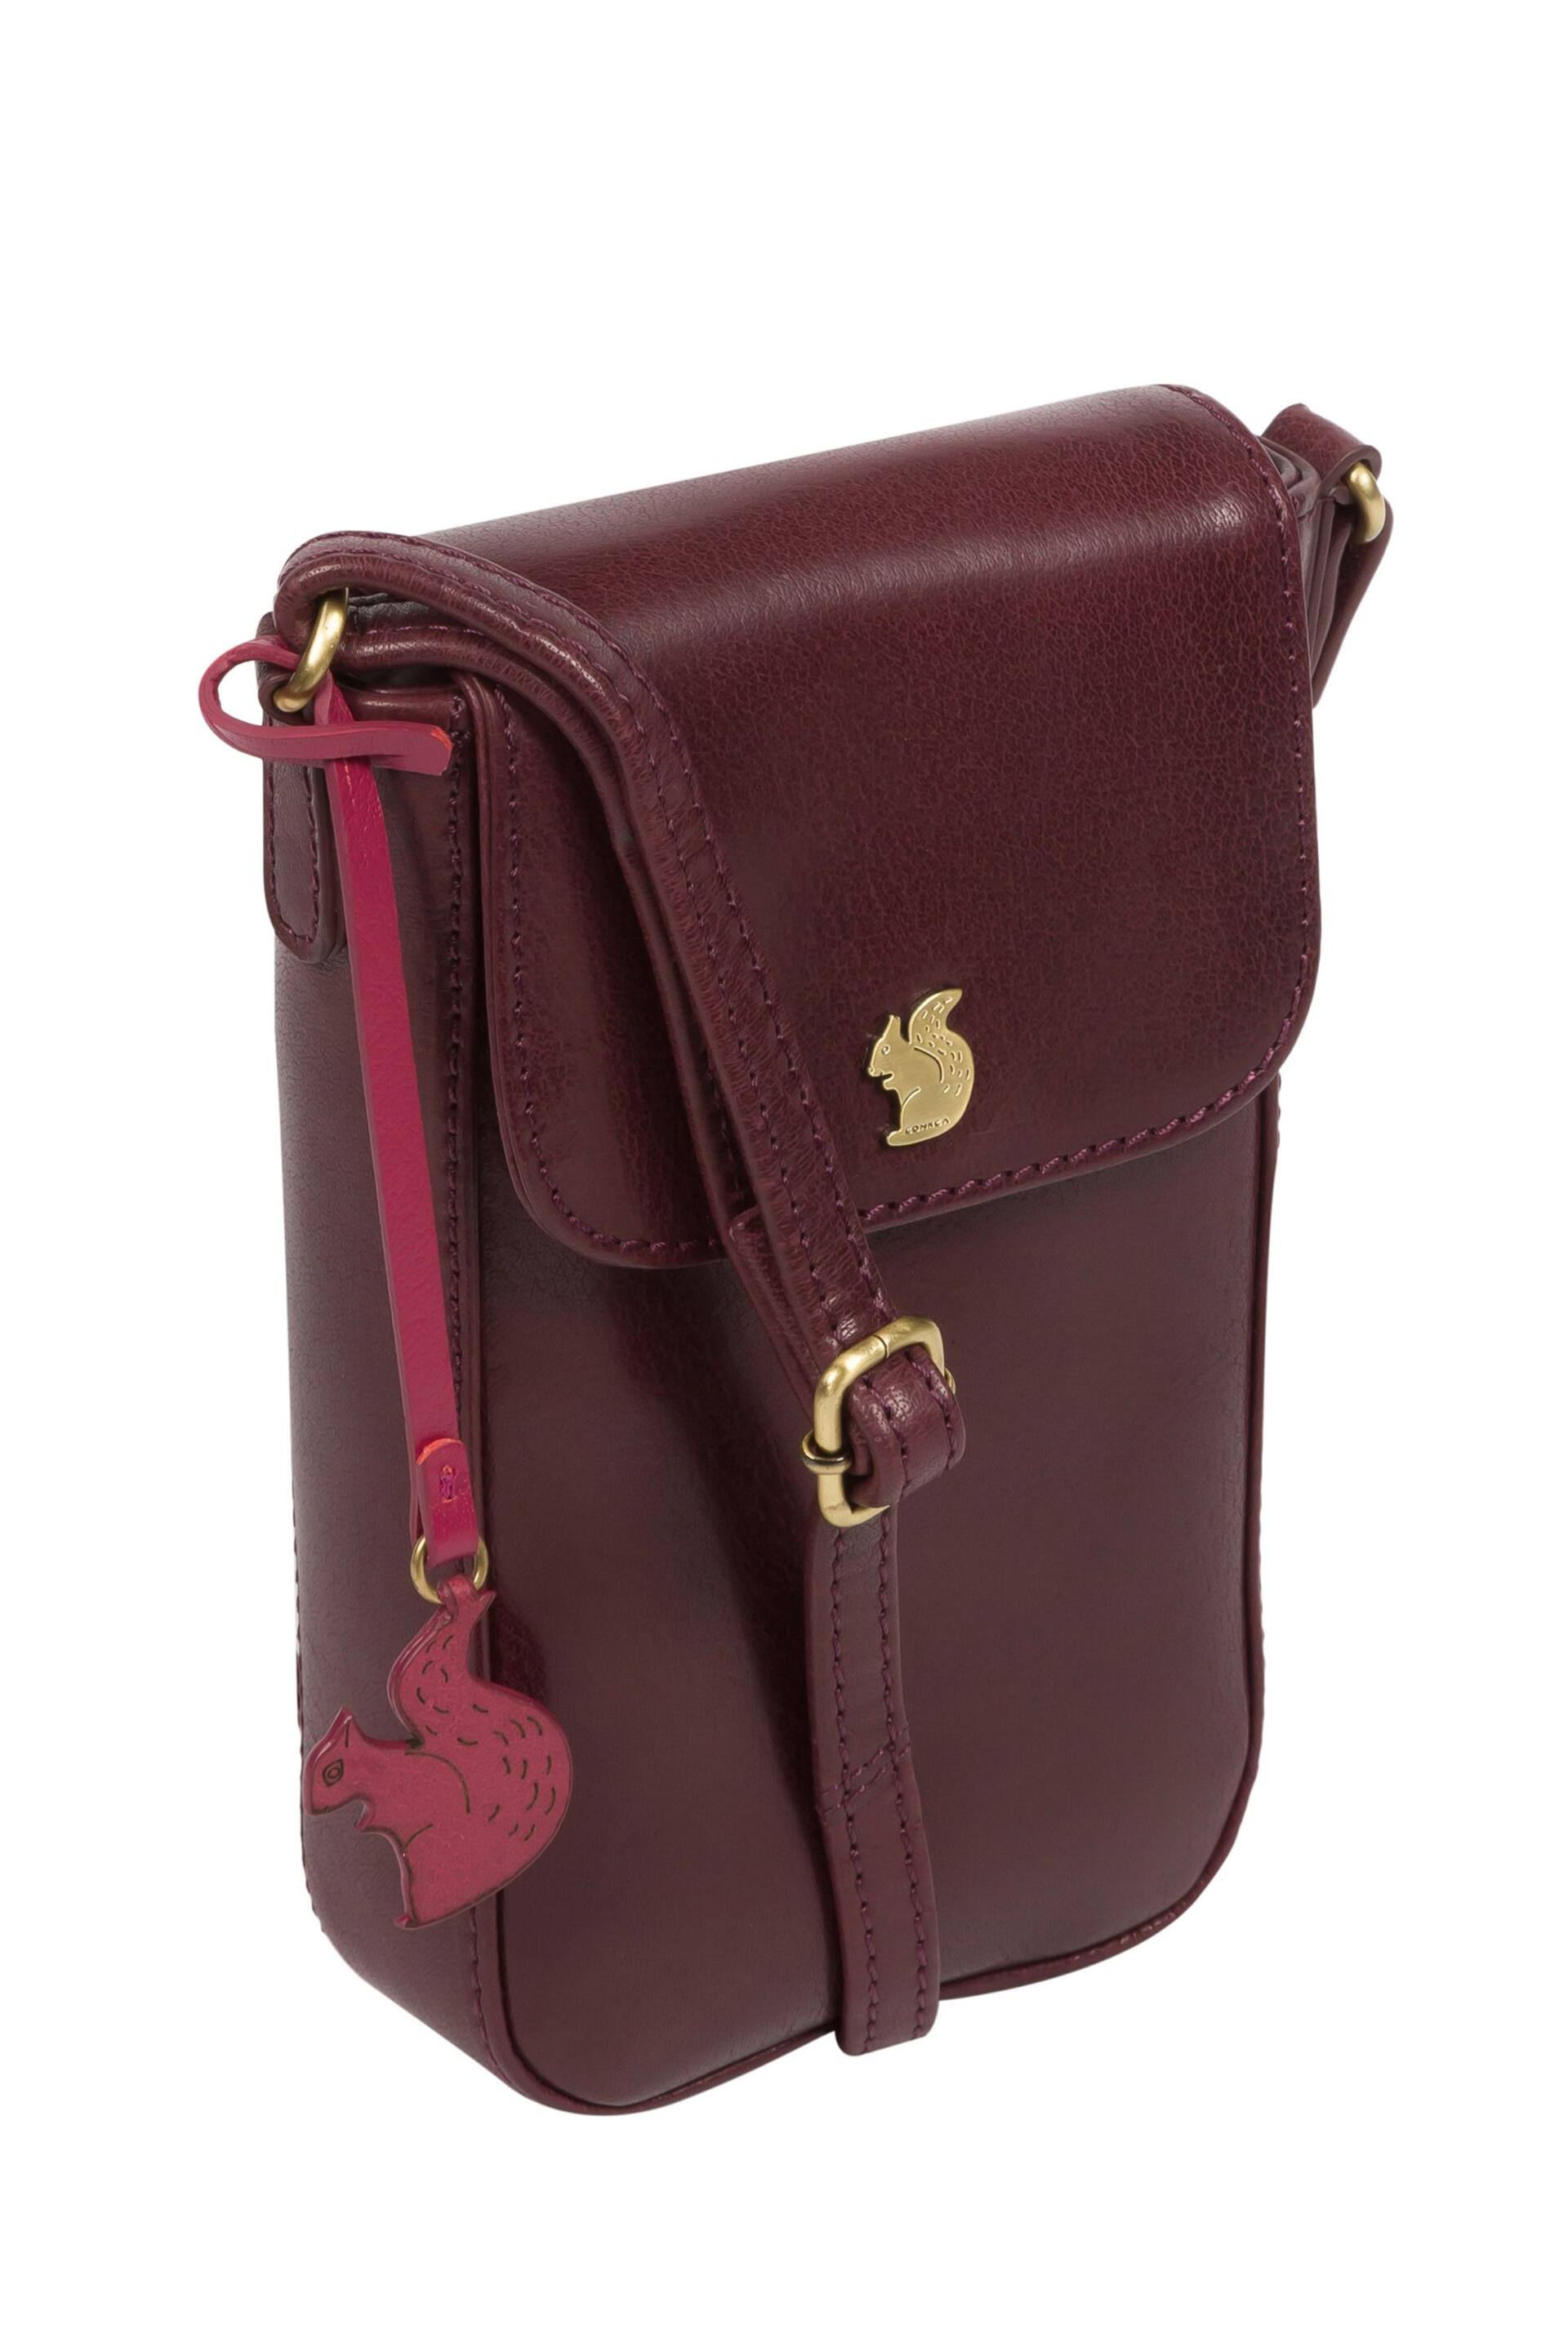 Conkca Buzz Leather Cross-Body Phone Bag - Image 5 of 5